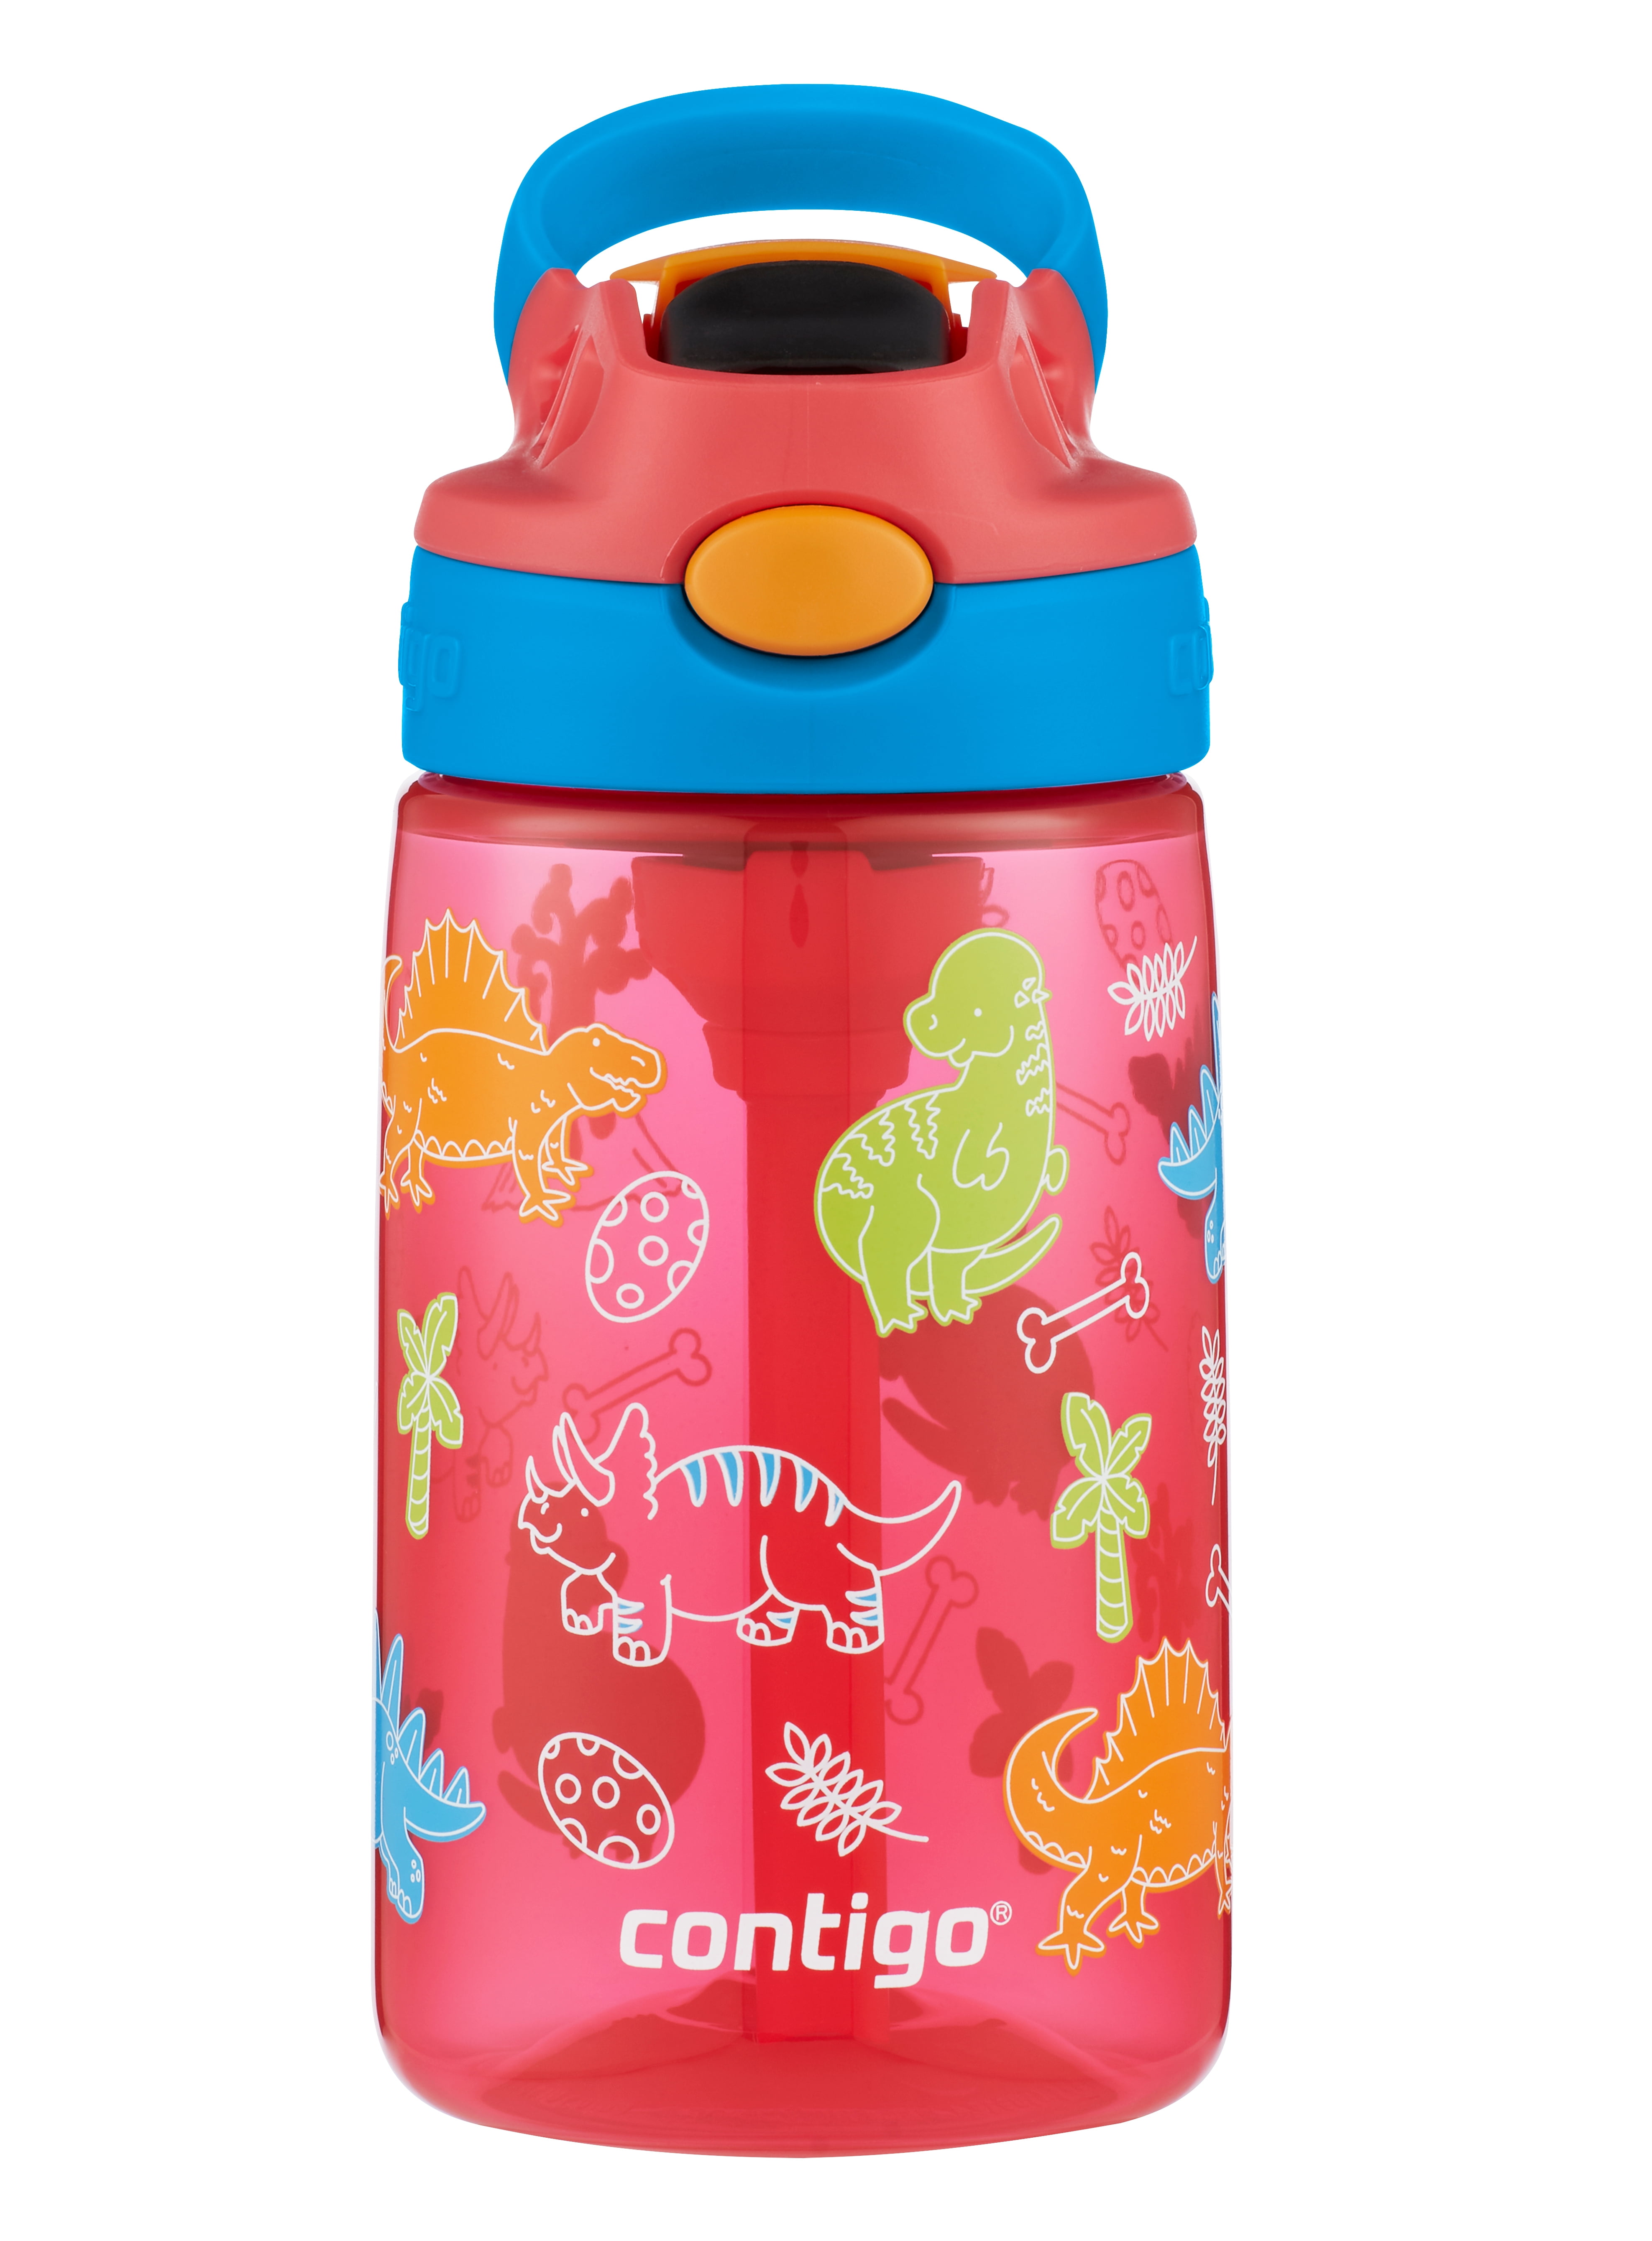 Hotwheels - Maroon - Children's Tumbler, Kid's Water Bottle, Water Bot